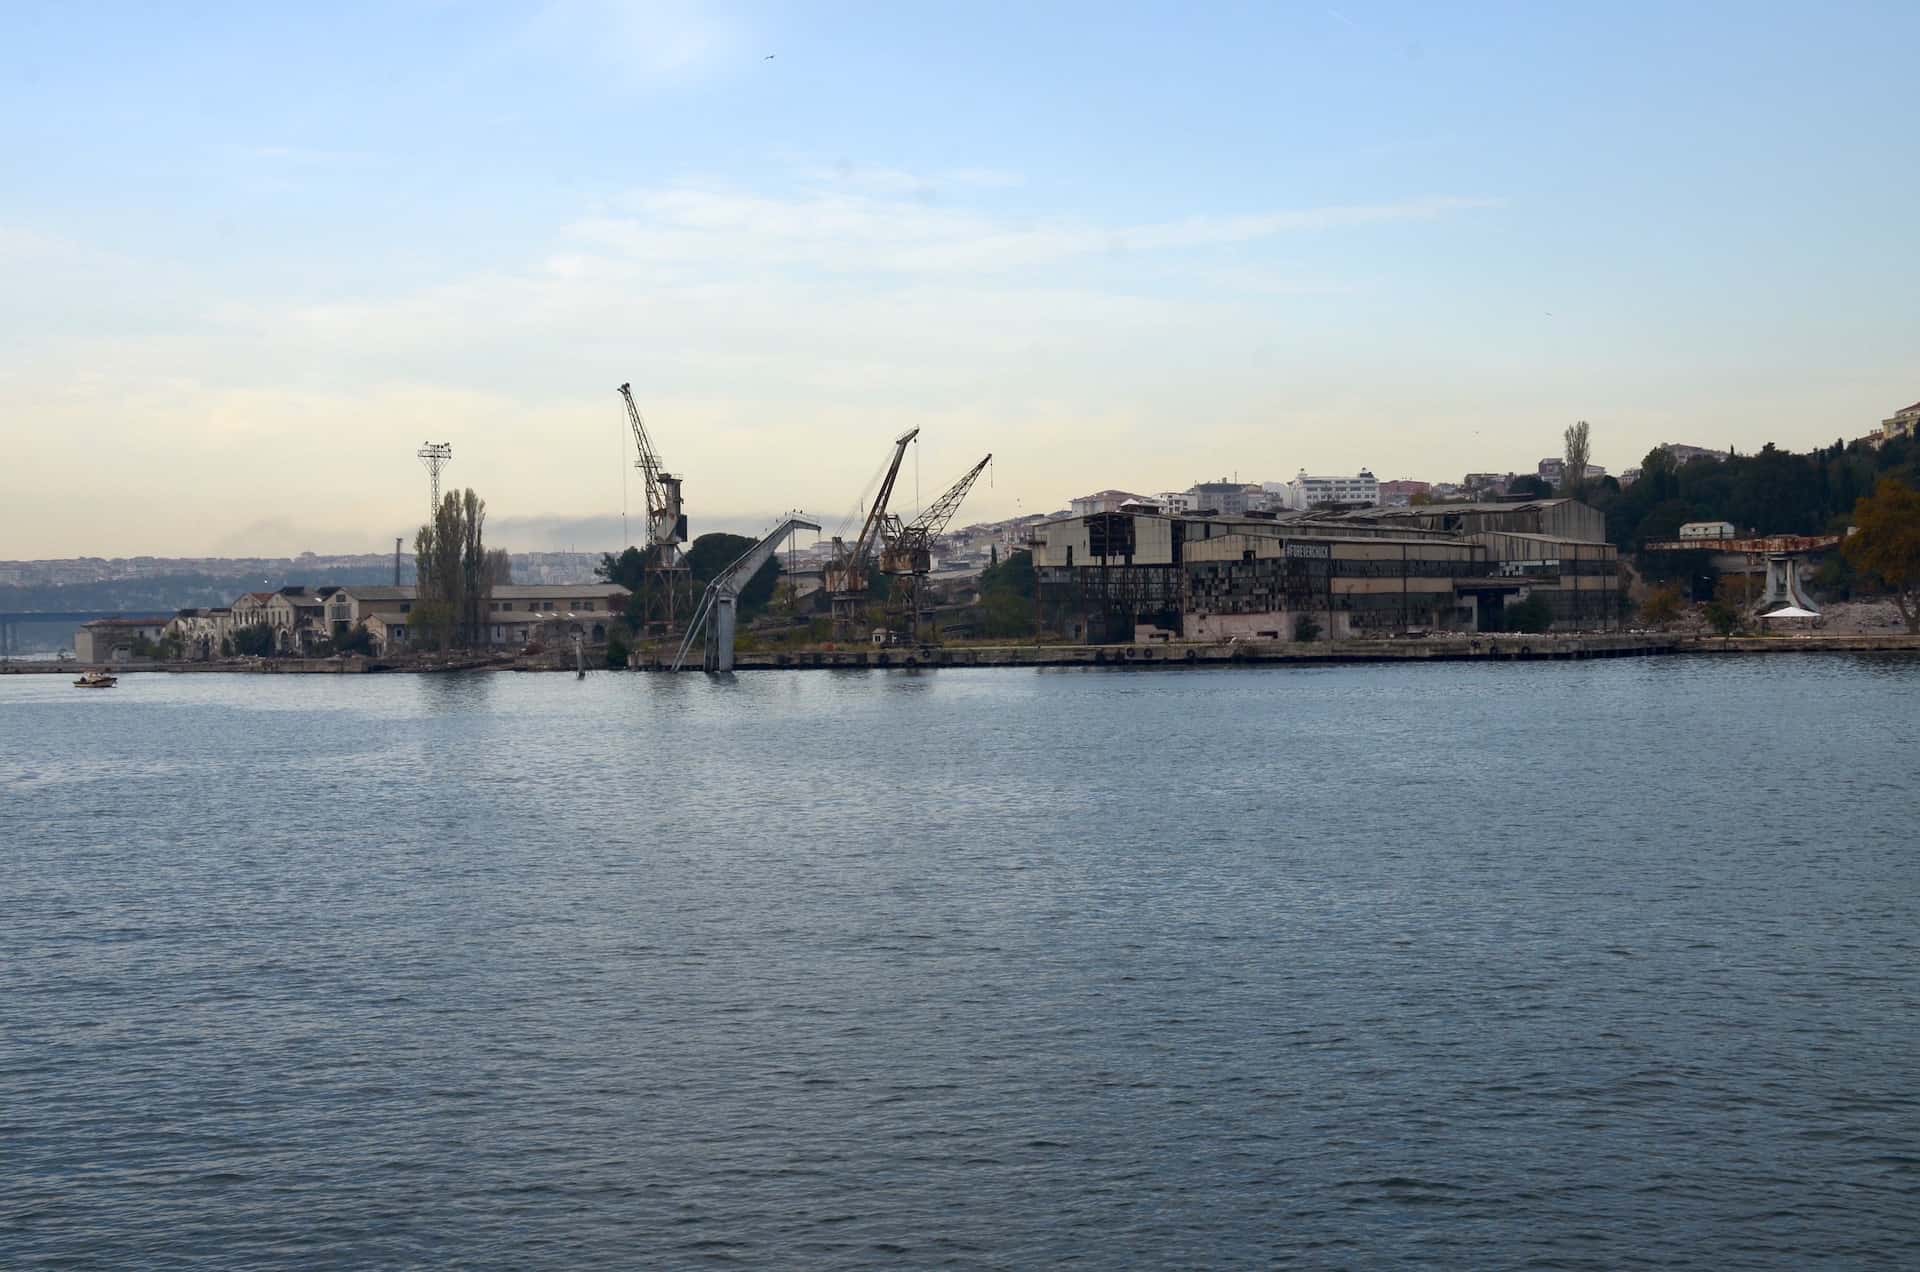 Imperial Shipyard in Istanbul, Turkey